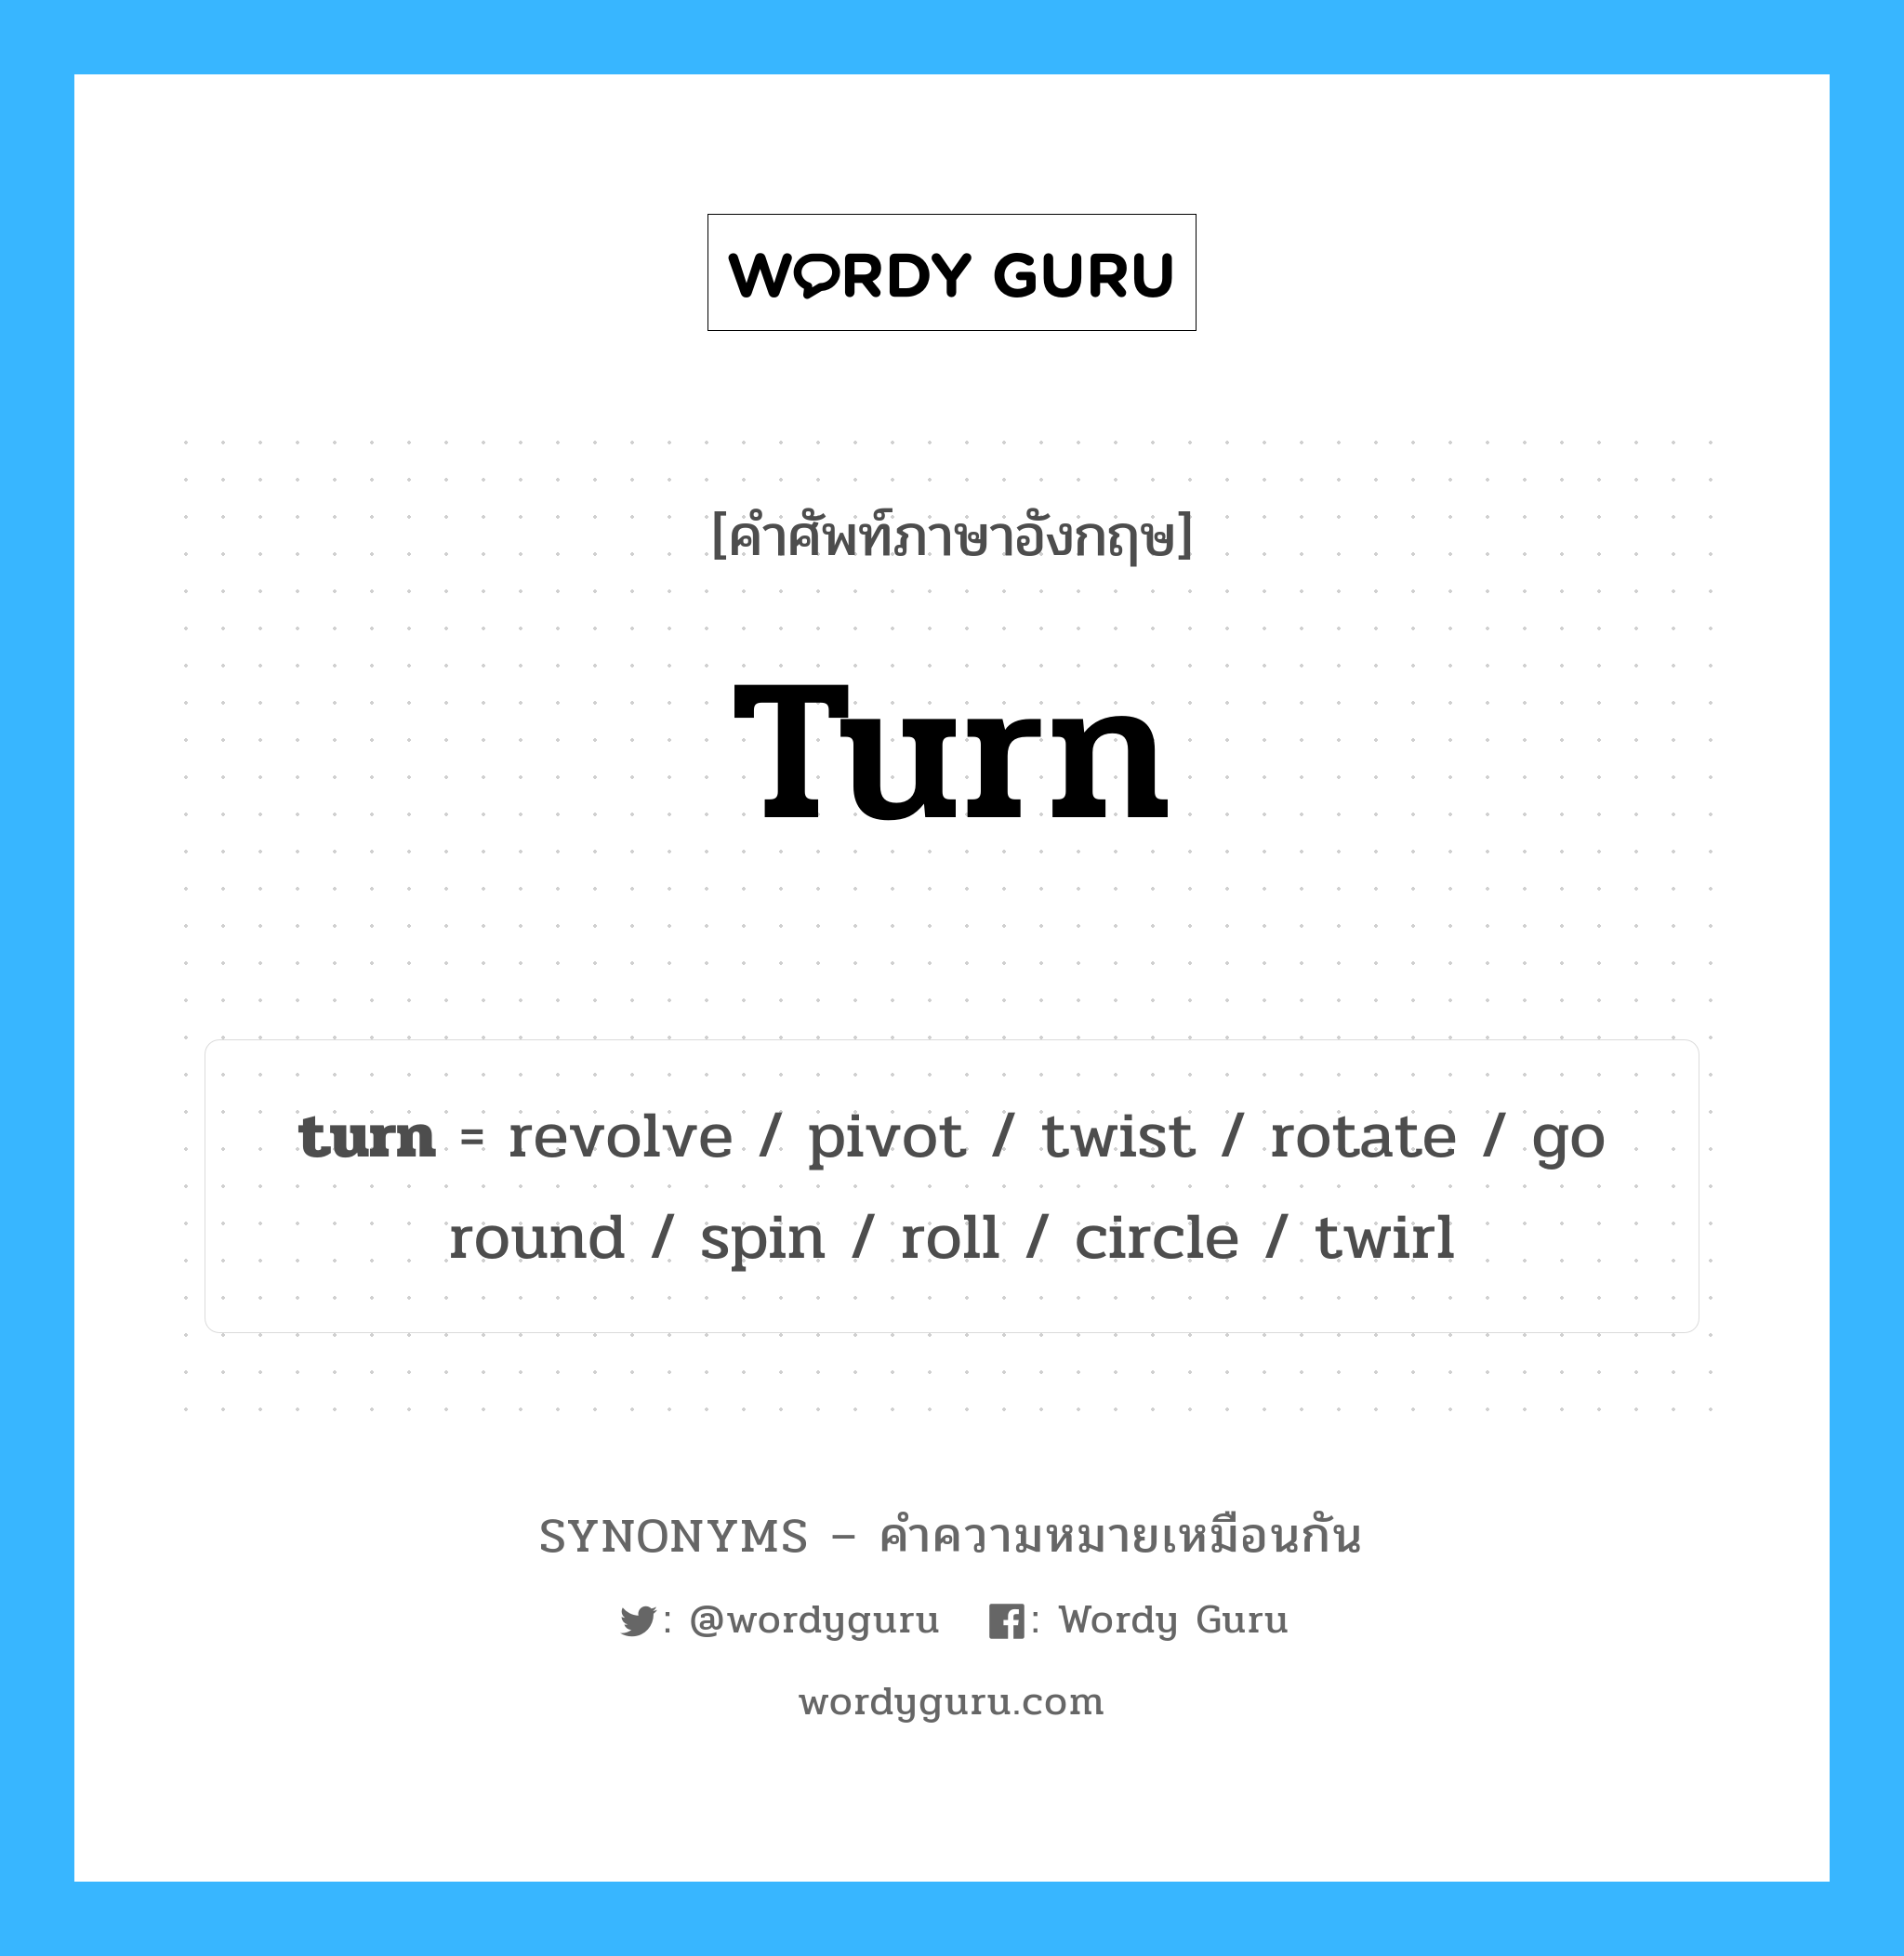 go round เป็นหนึ่งใน turn และมีคำอื่น ๆ อีกดังนี้, คำศัพท์ภาษาอังกฤษ go round ความหมายคล้ายกันกับ turn แปลว่า ไปรอบ หมวด turn